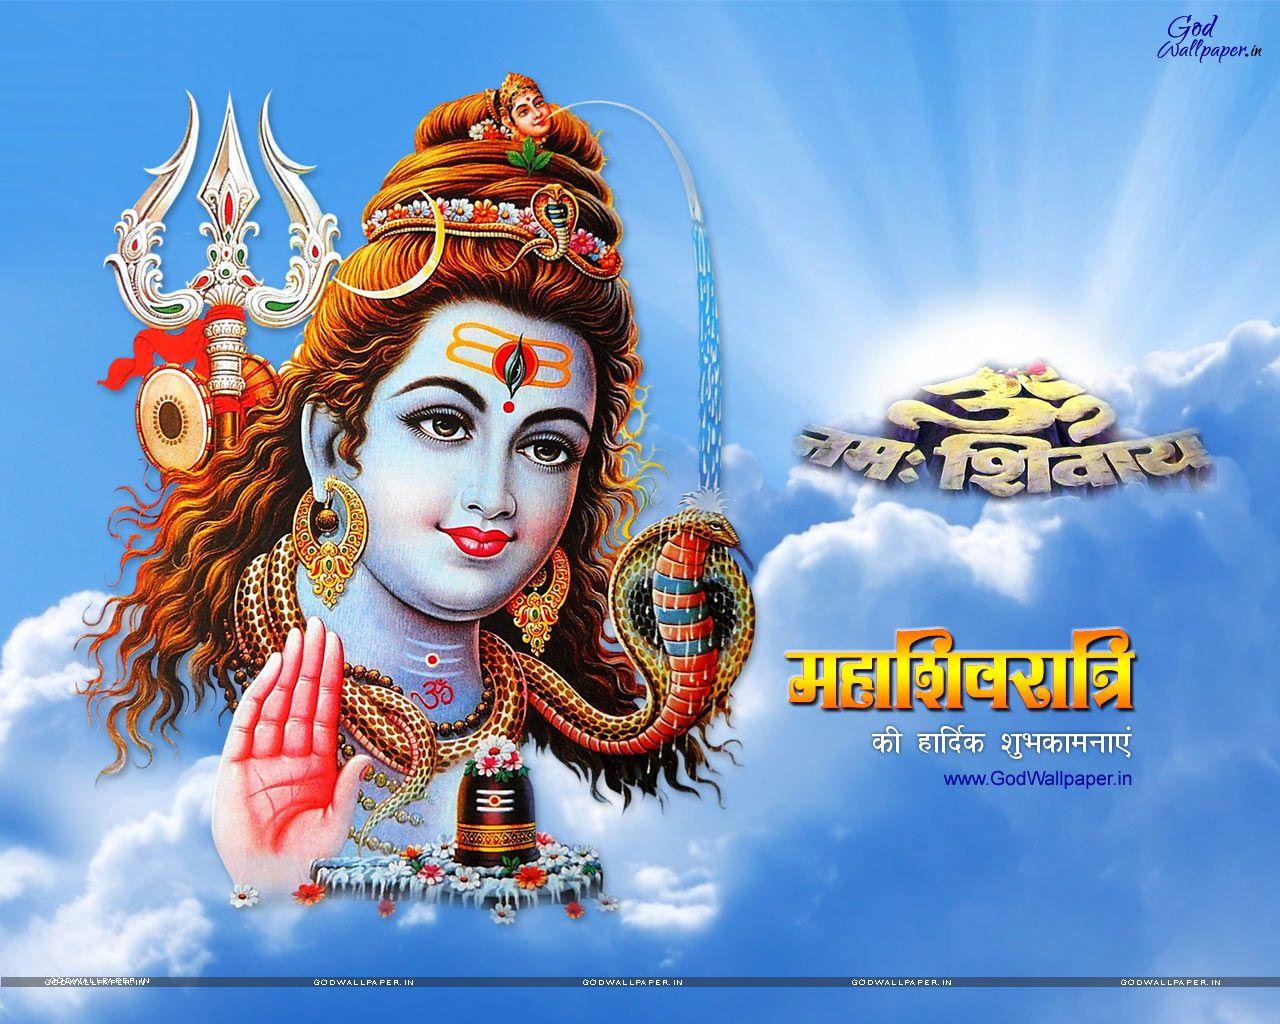 Maha Shivaratri HD Wallpaper & Image Download